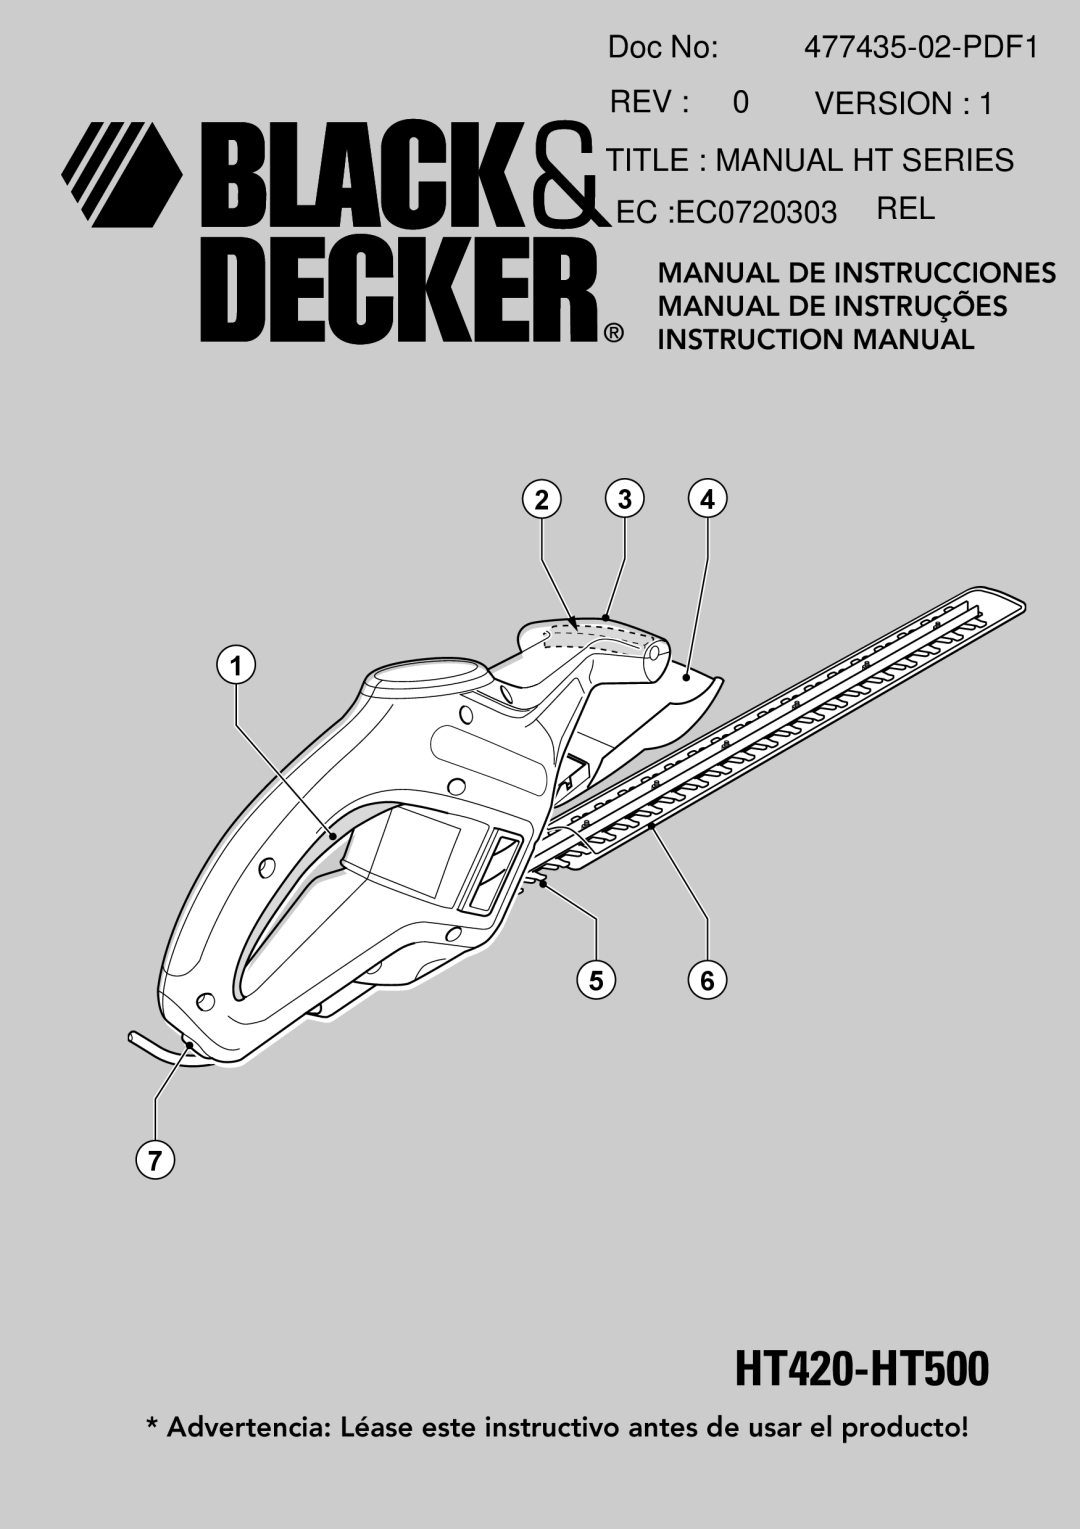 Black & Decker 477435-02-PDF1, HT420 instruction manual Doc No, REV 0 VERSION TITLE MANUAL HT SERIES EC EC0720303 REL 